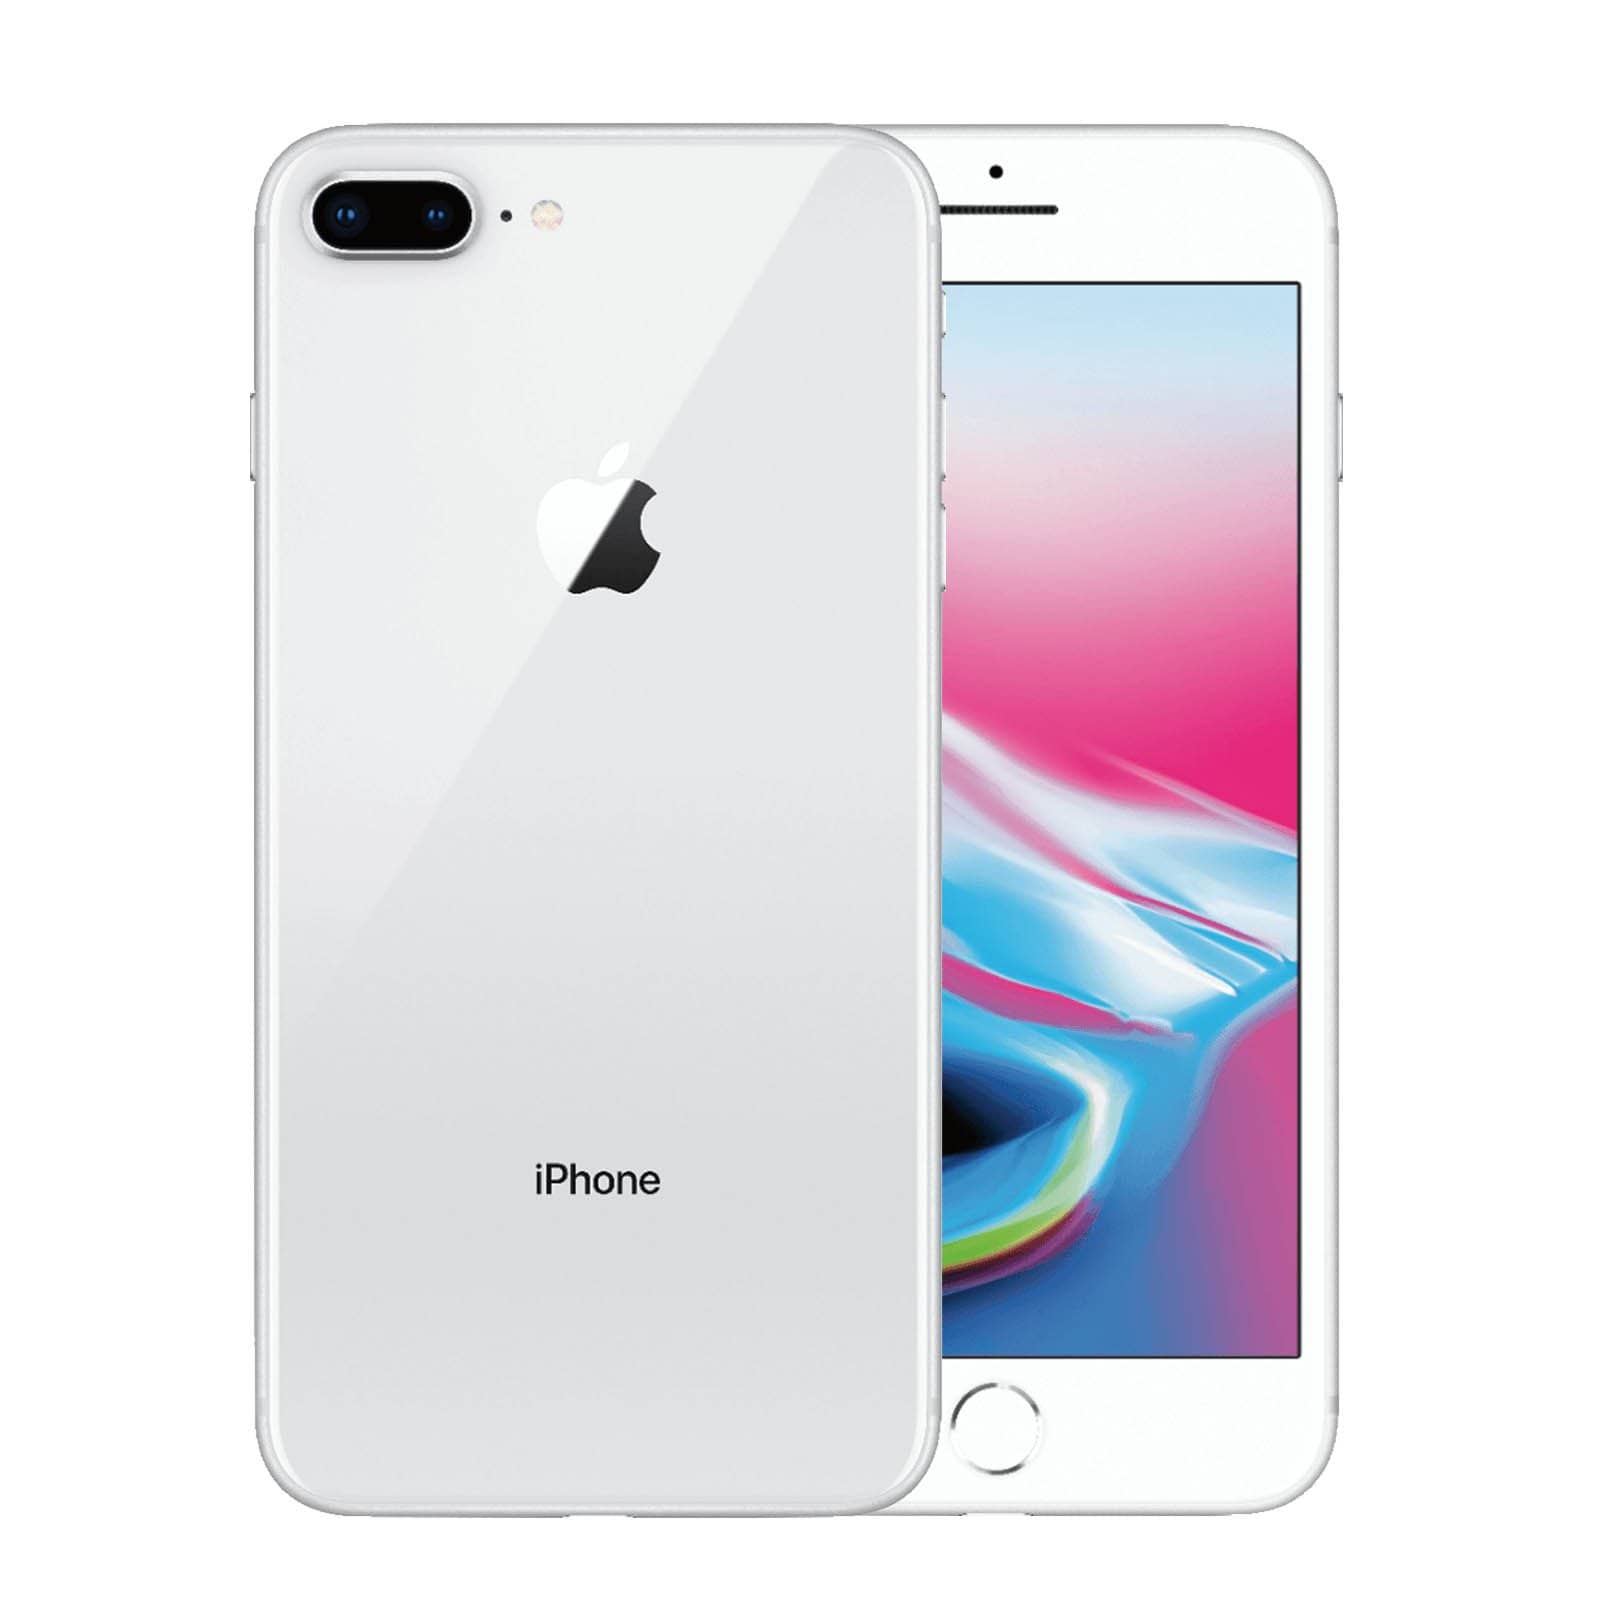 Apple iPhone 8 Plus 256GB Silver Good - Unlocked 256GB Silver Good